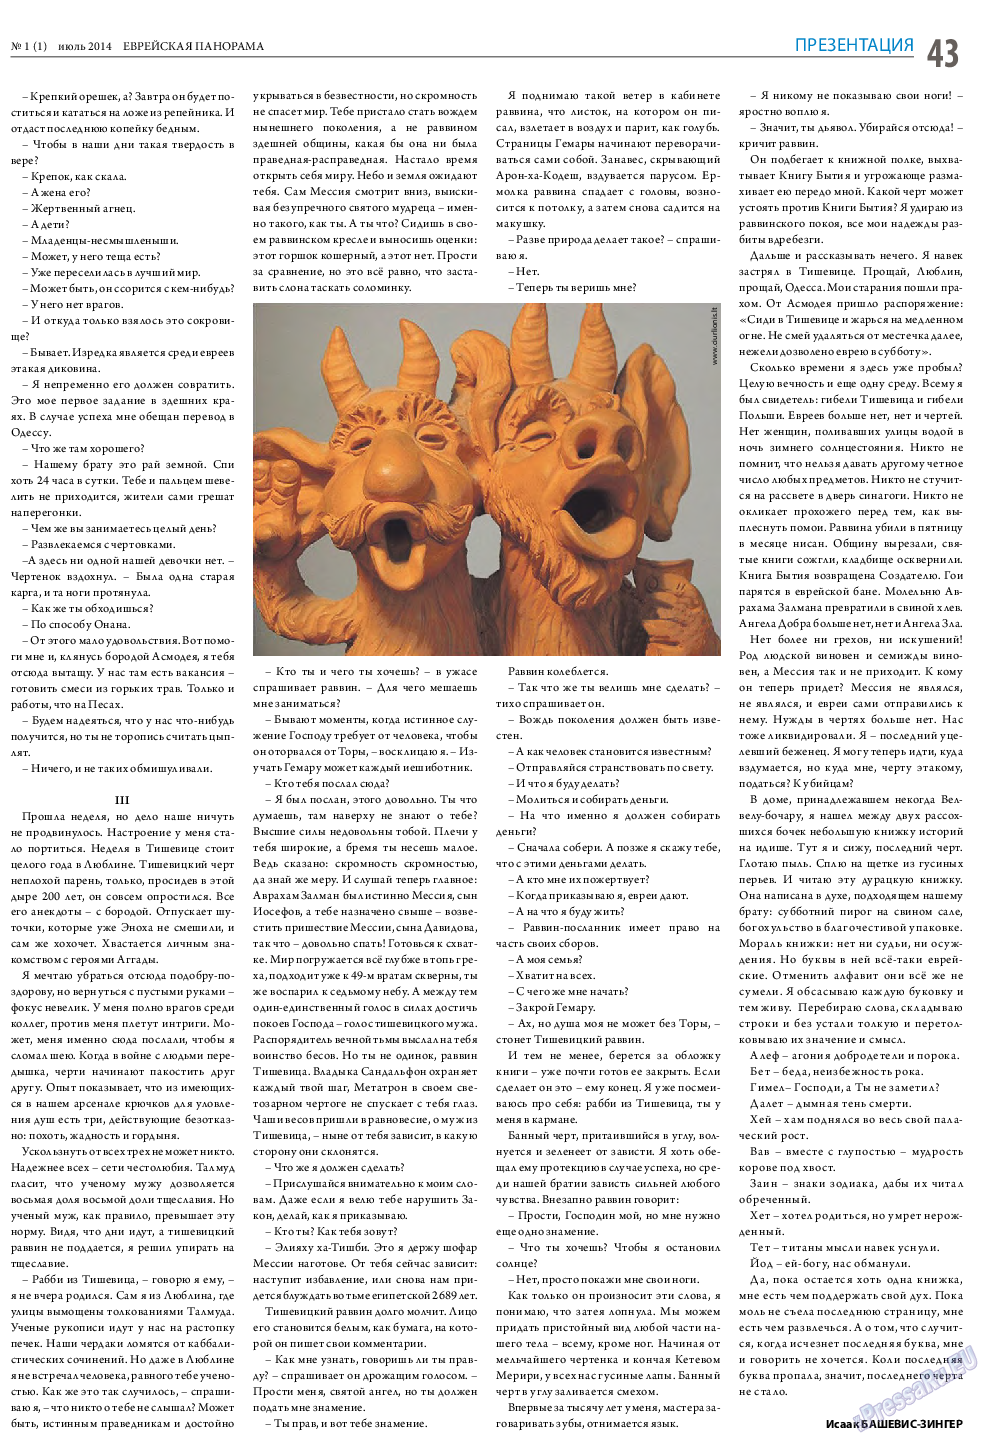 Еврейская панорама, газета. 2014 №1 стр.43